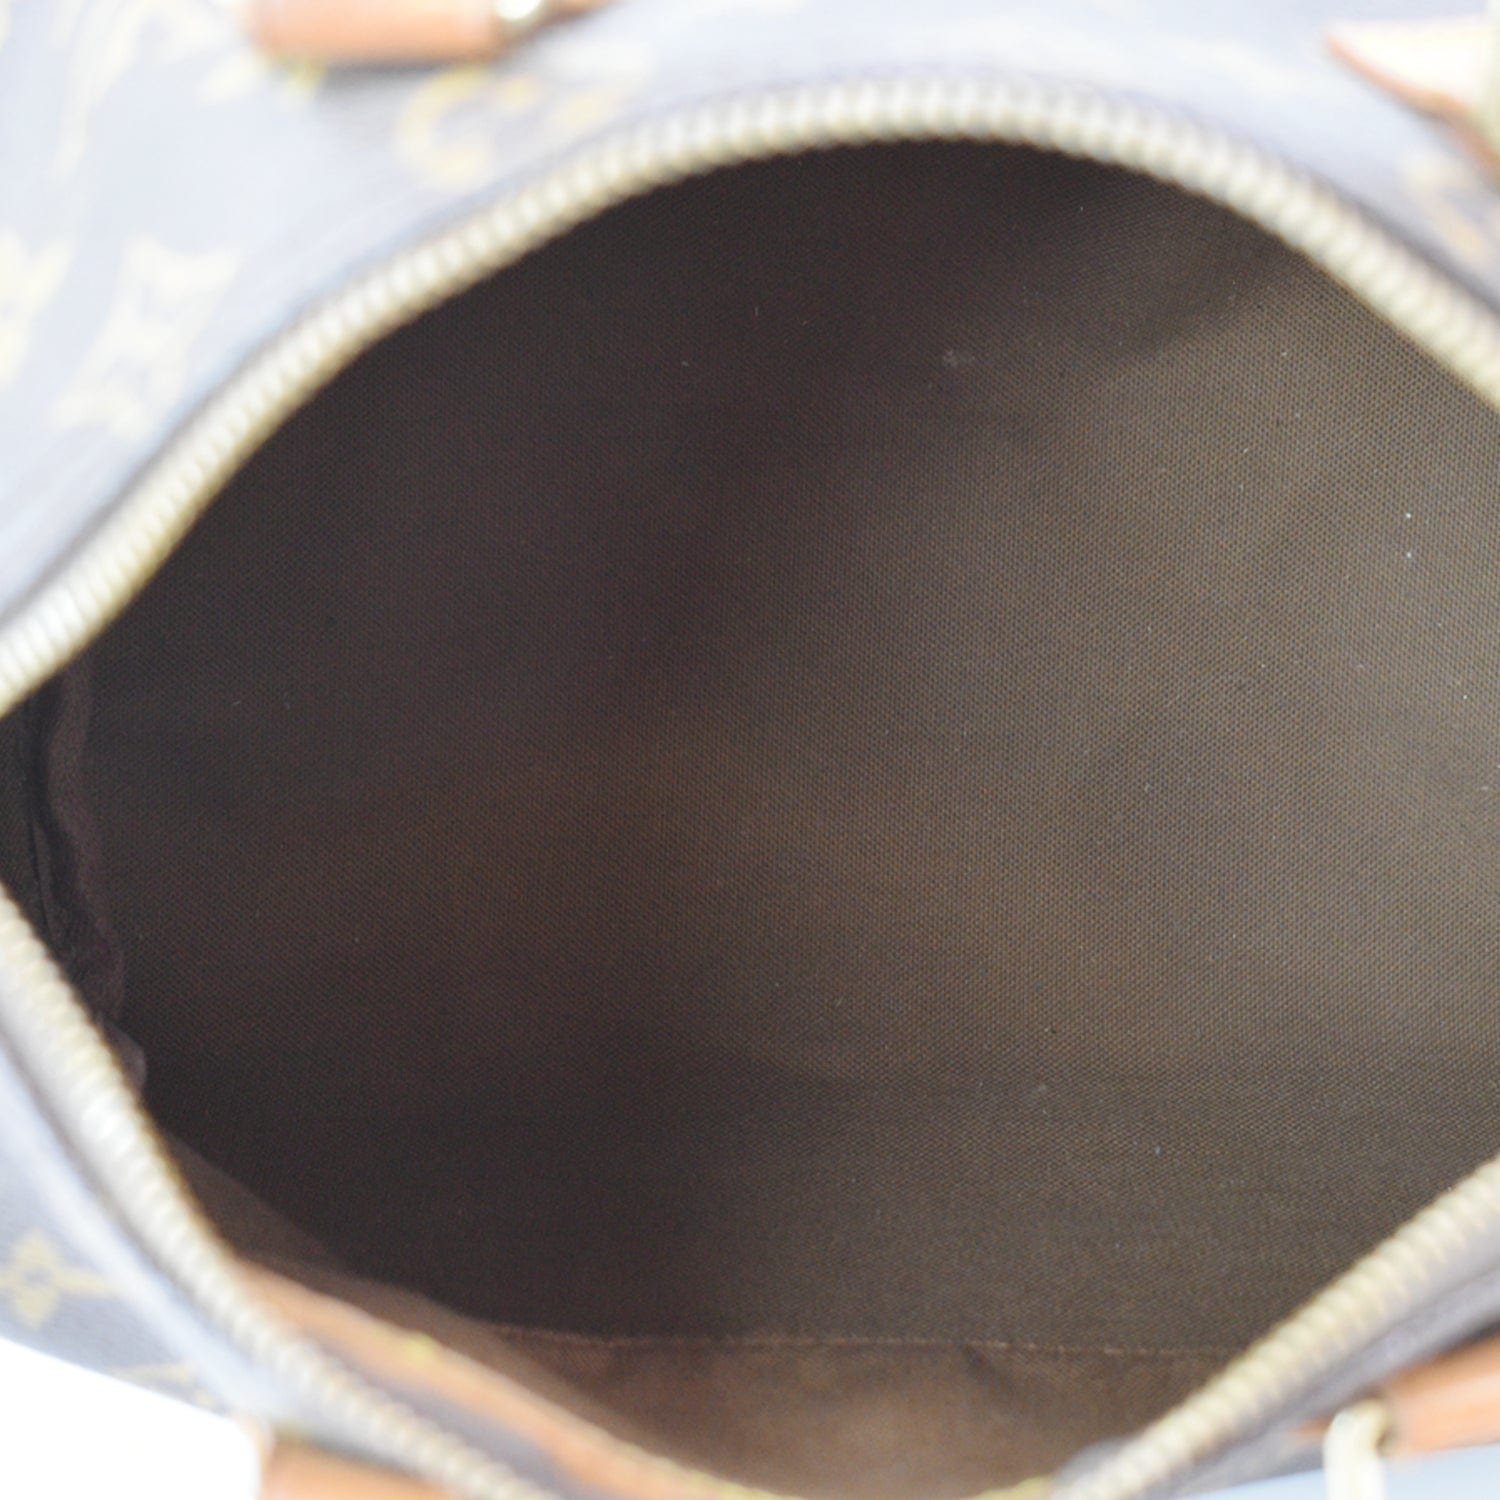 Speedy leather handbag Louis Vuitton Brown in Leather - 31594126